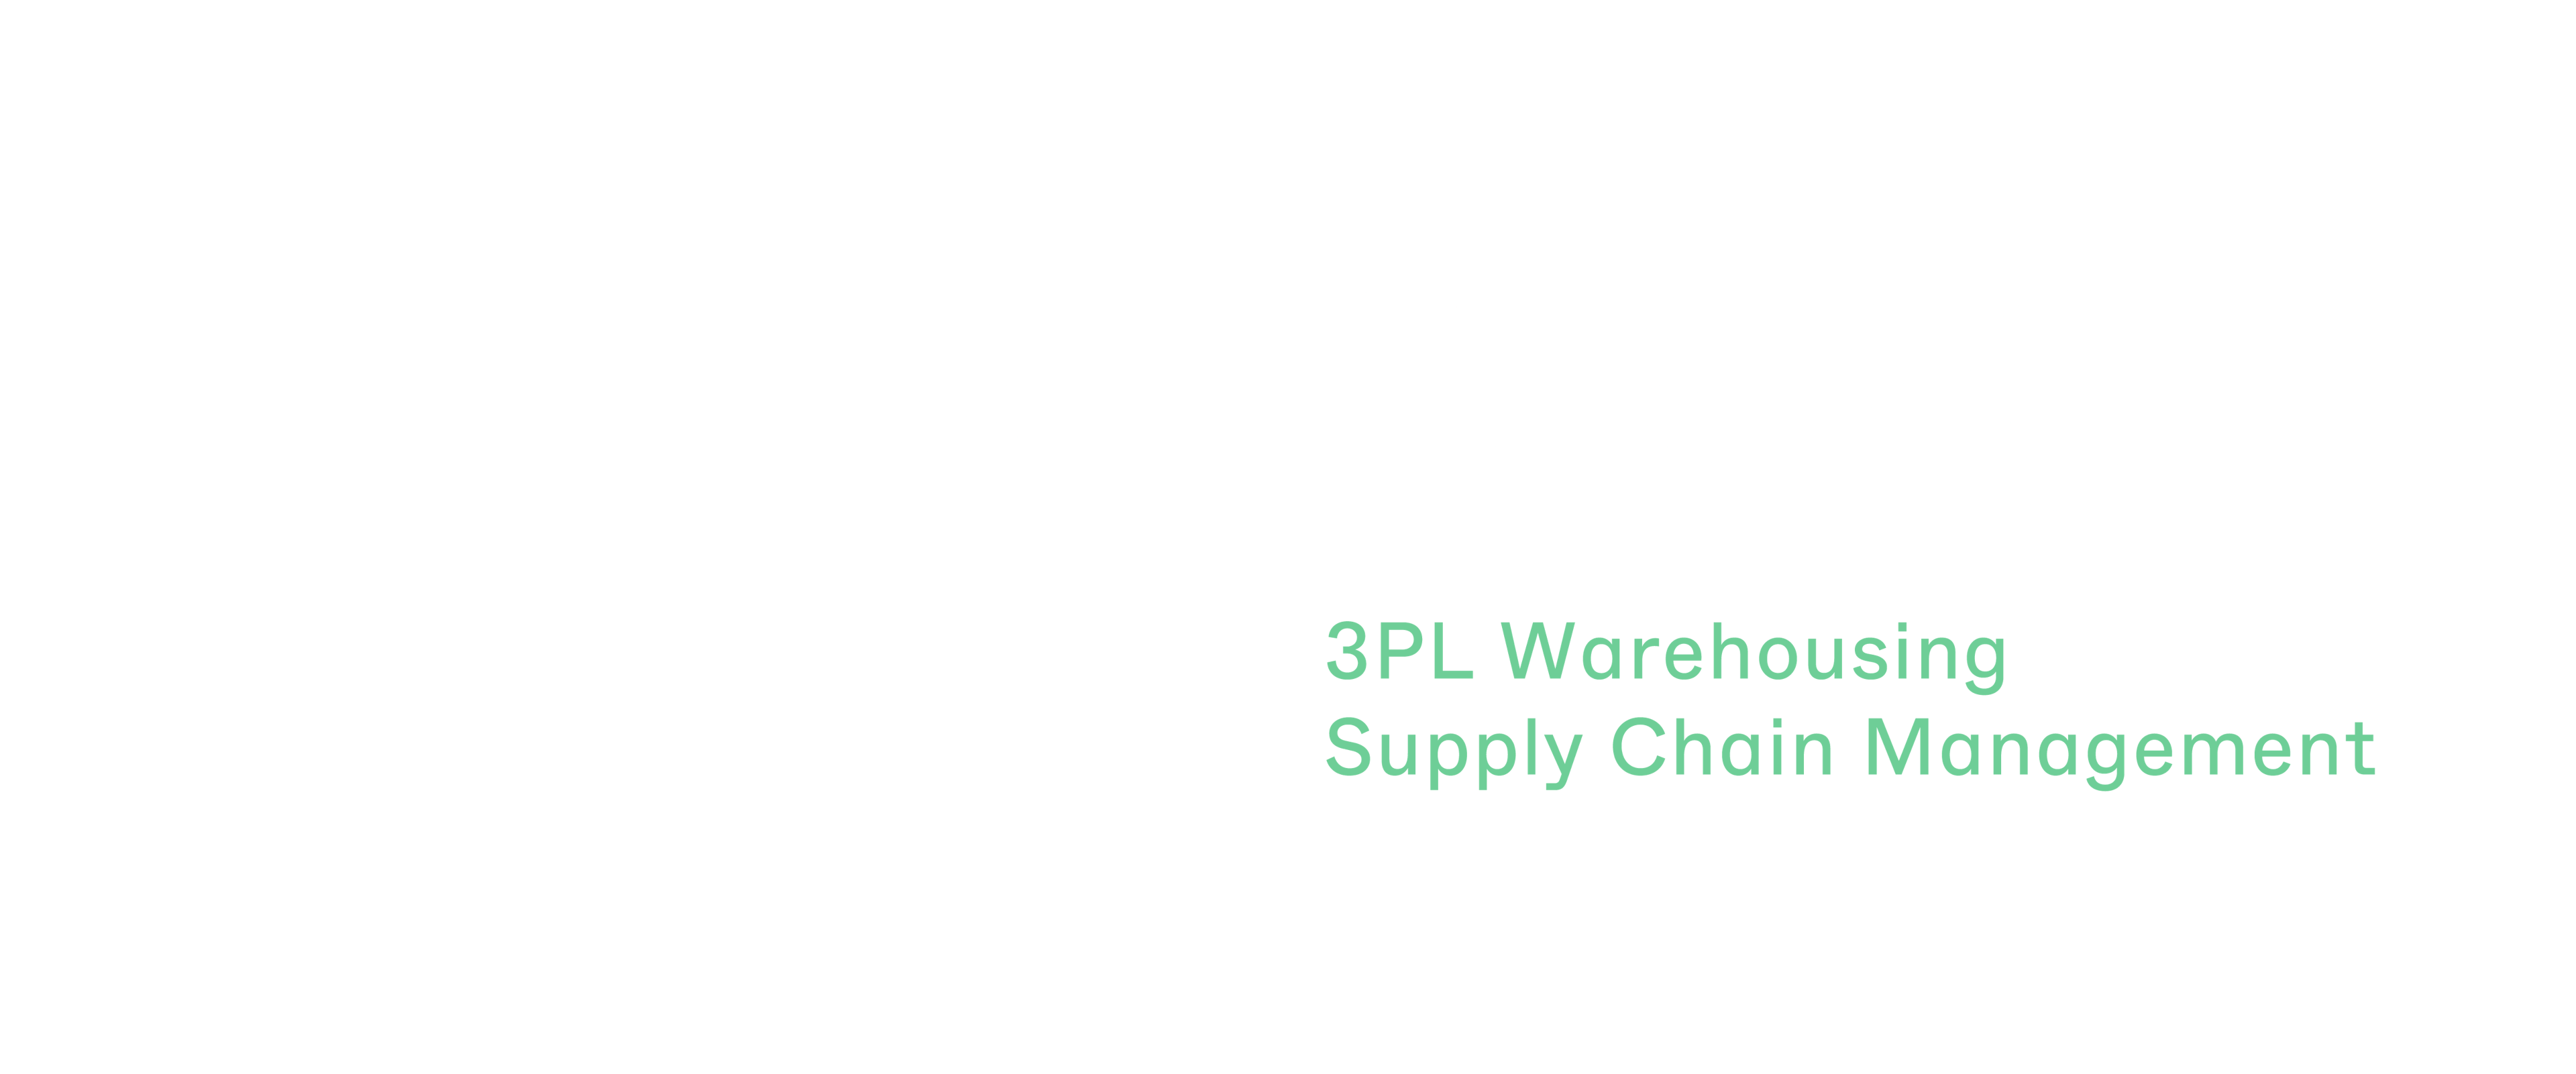 DEL storage, 3PL warehousing and supply chain management.